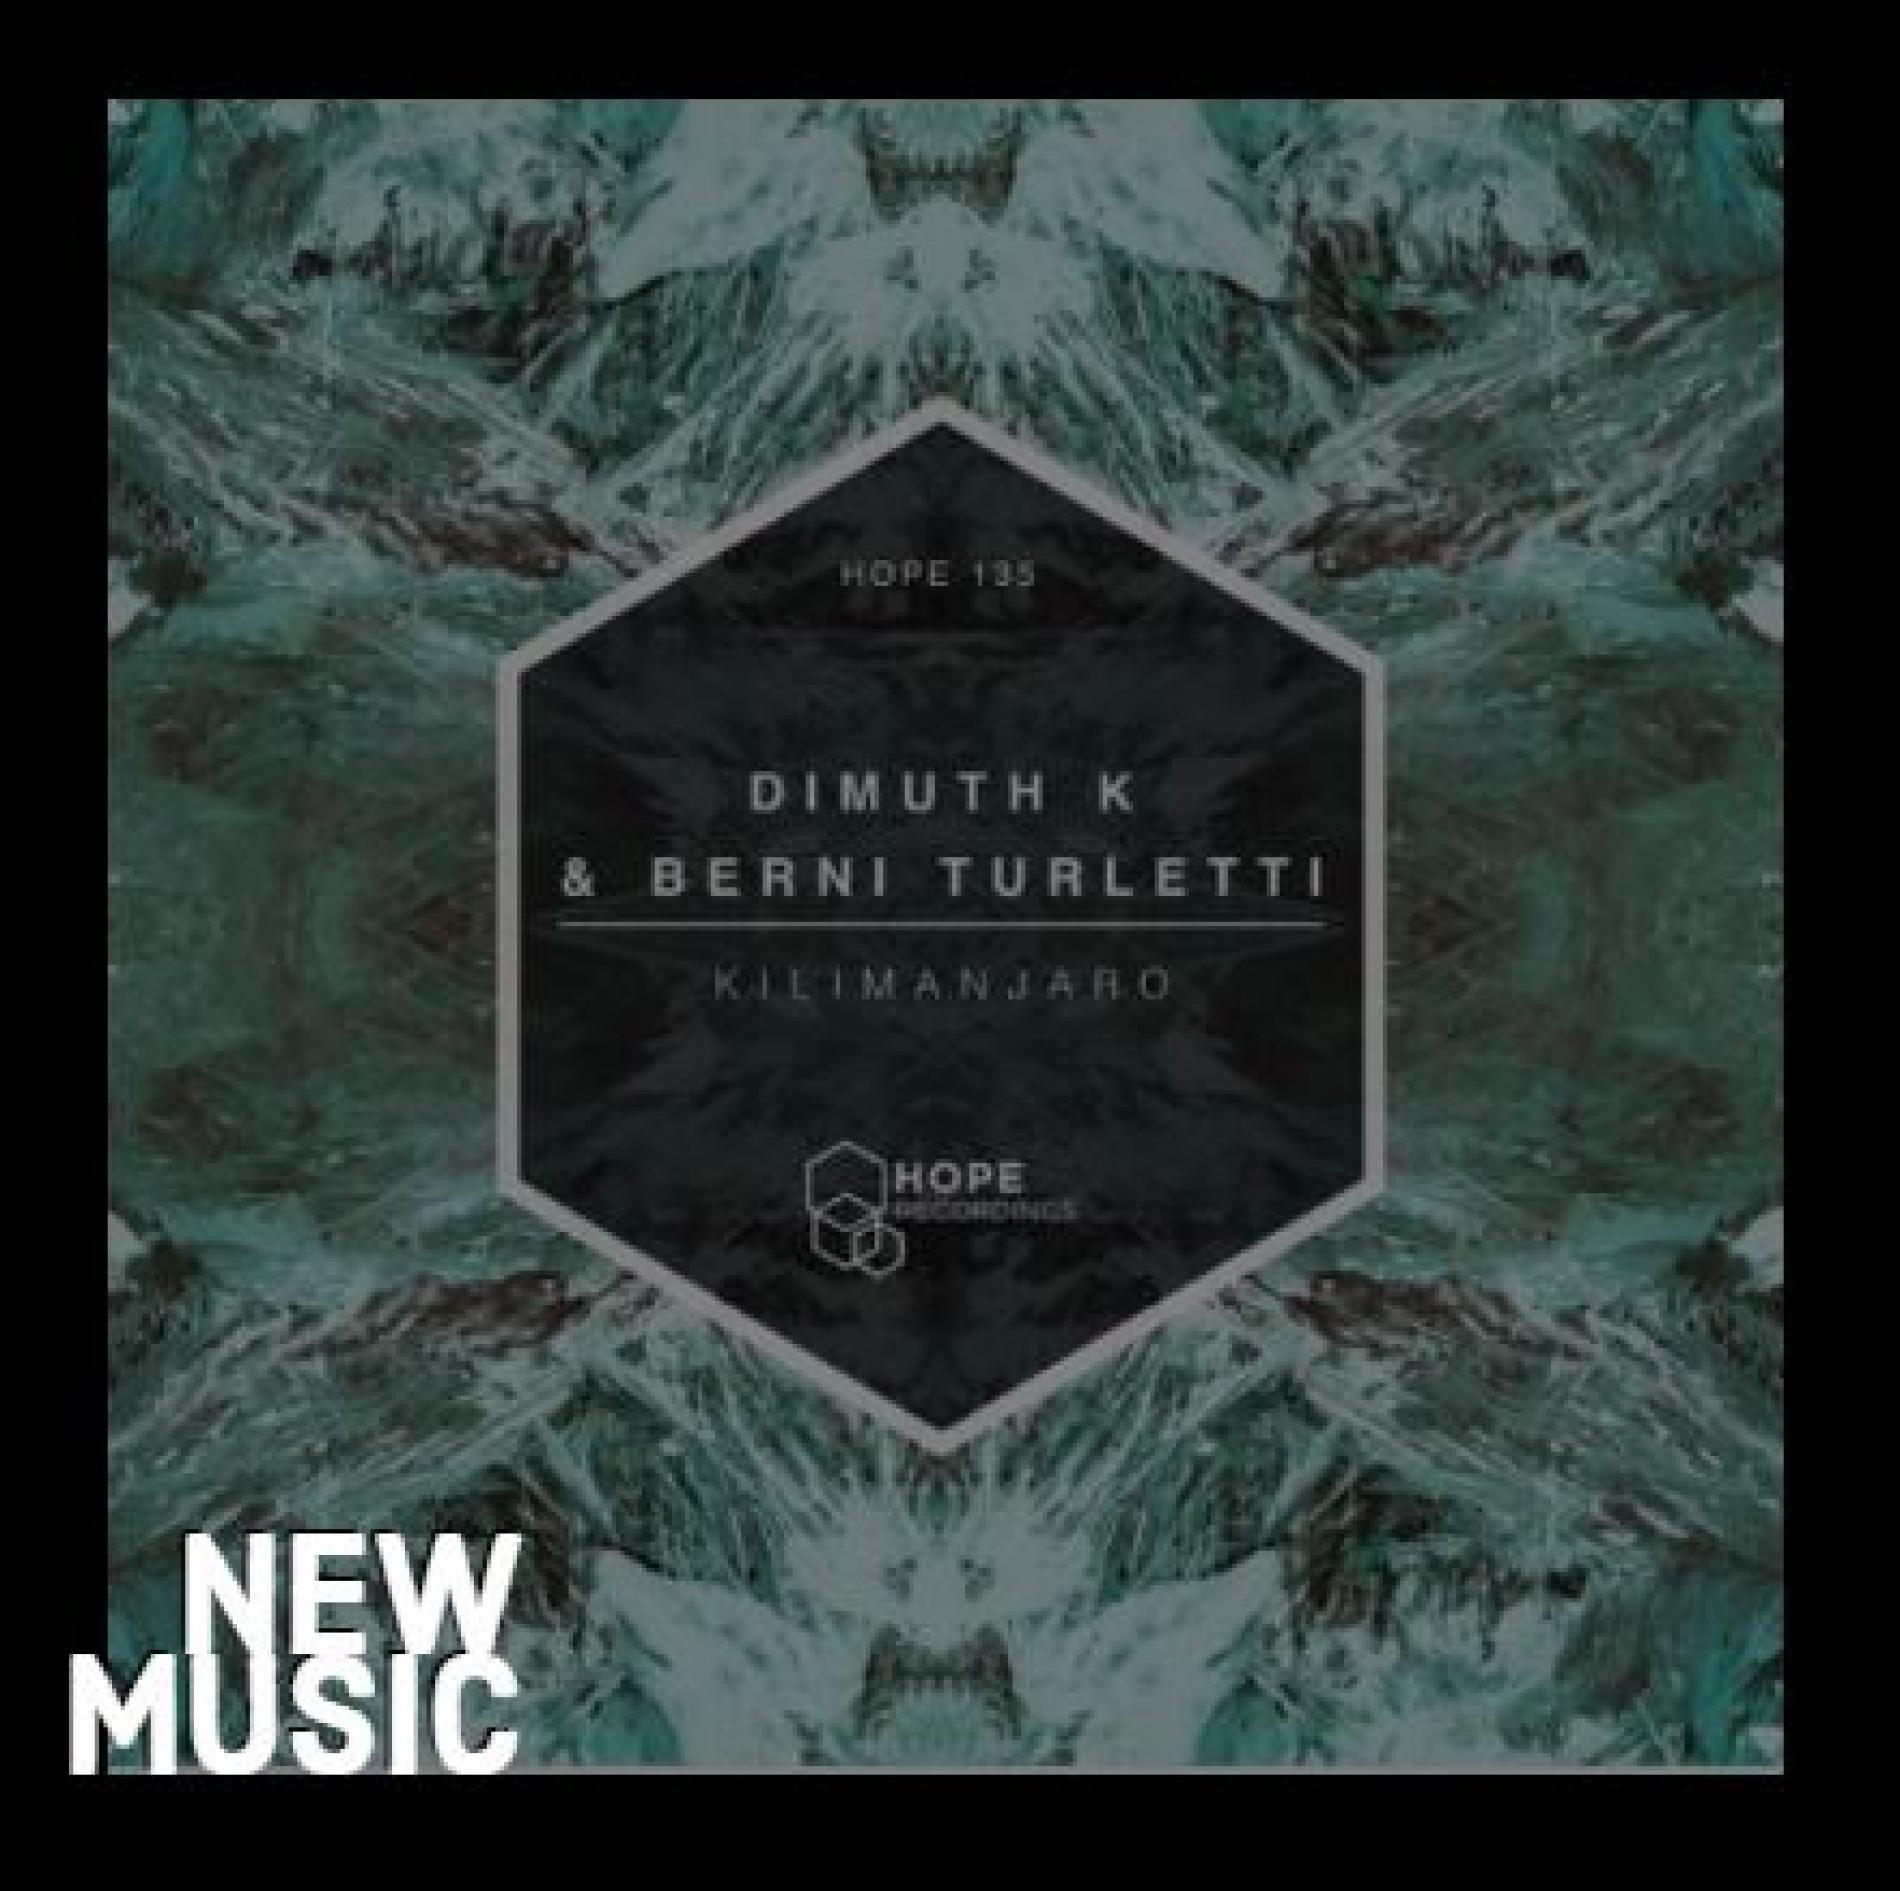 Dimuth K & Berni Turletti – Kilimanjaro EP [Hope Recordings]